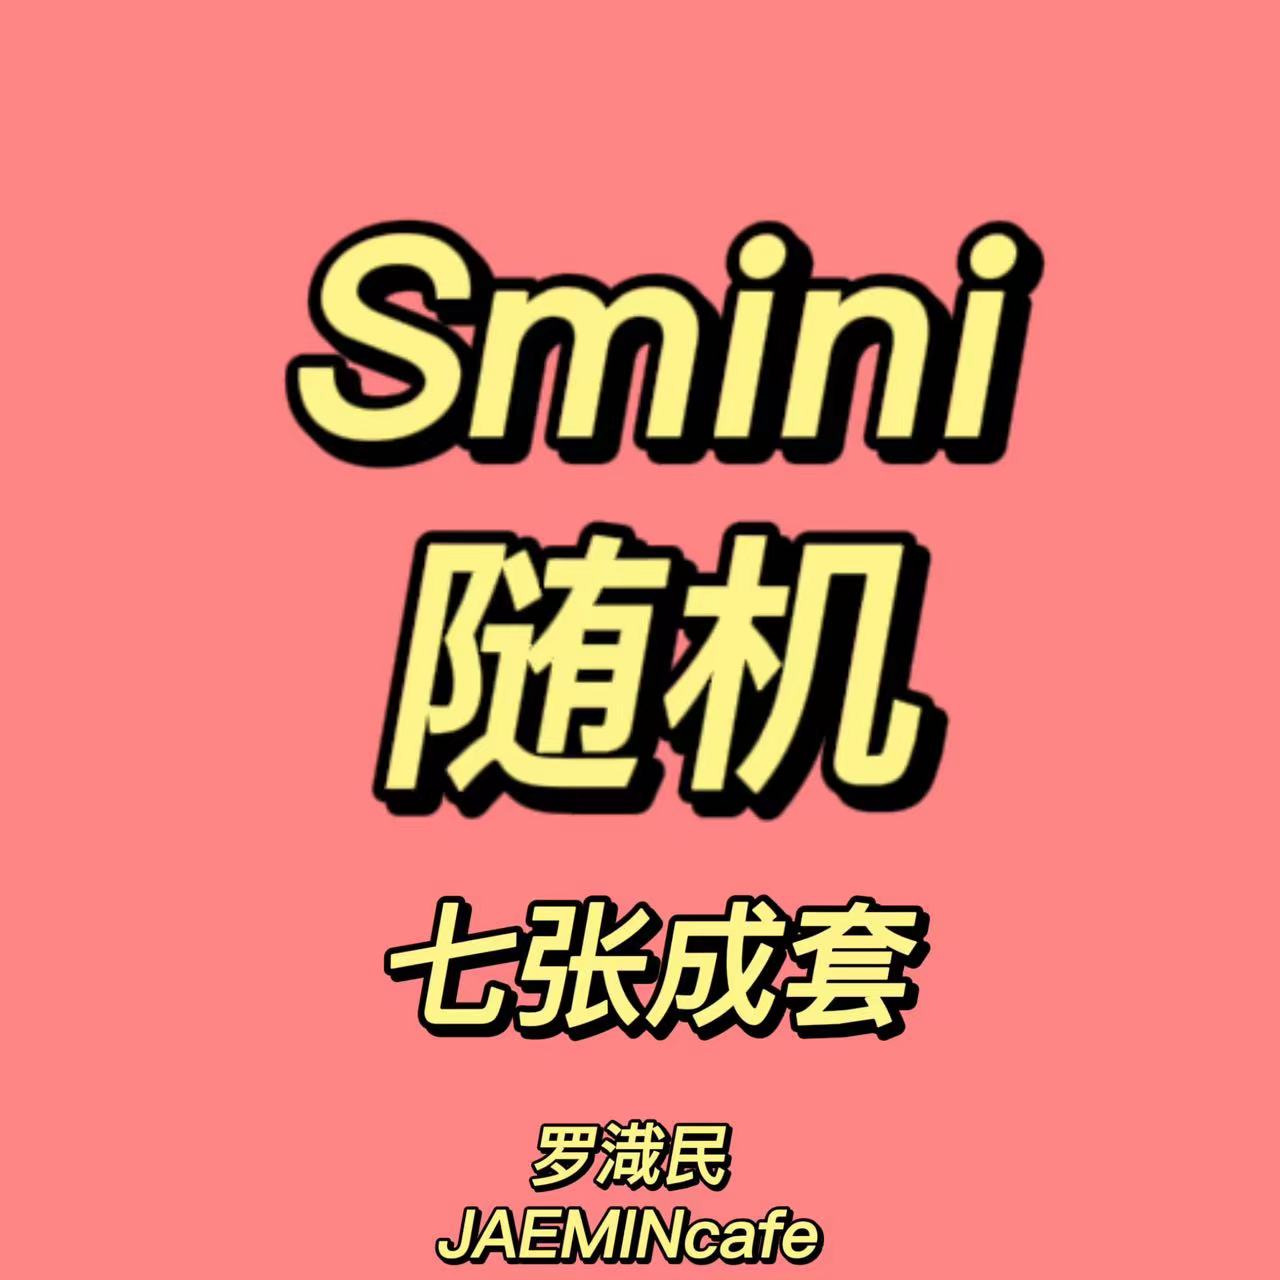 [全款 裸专] NCT DREAM - 正规3辑 [ISTJ] (SMini Ver.) (Smart Album) (随机版本)_罗渽民吧